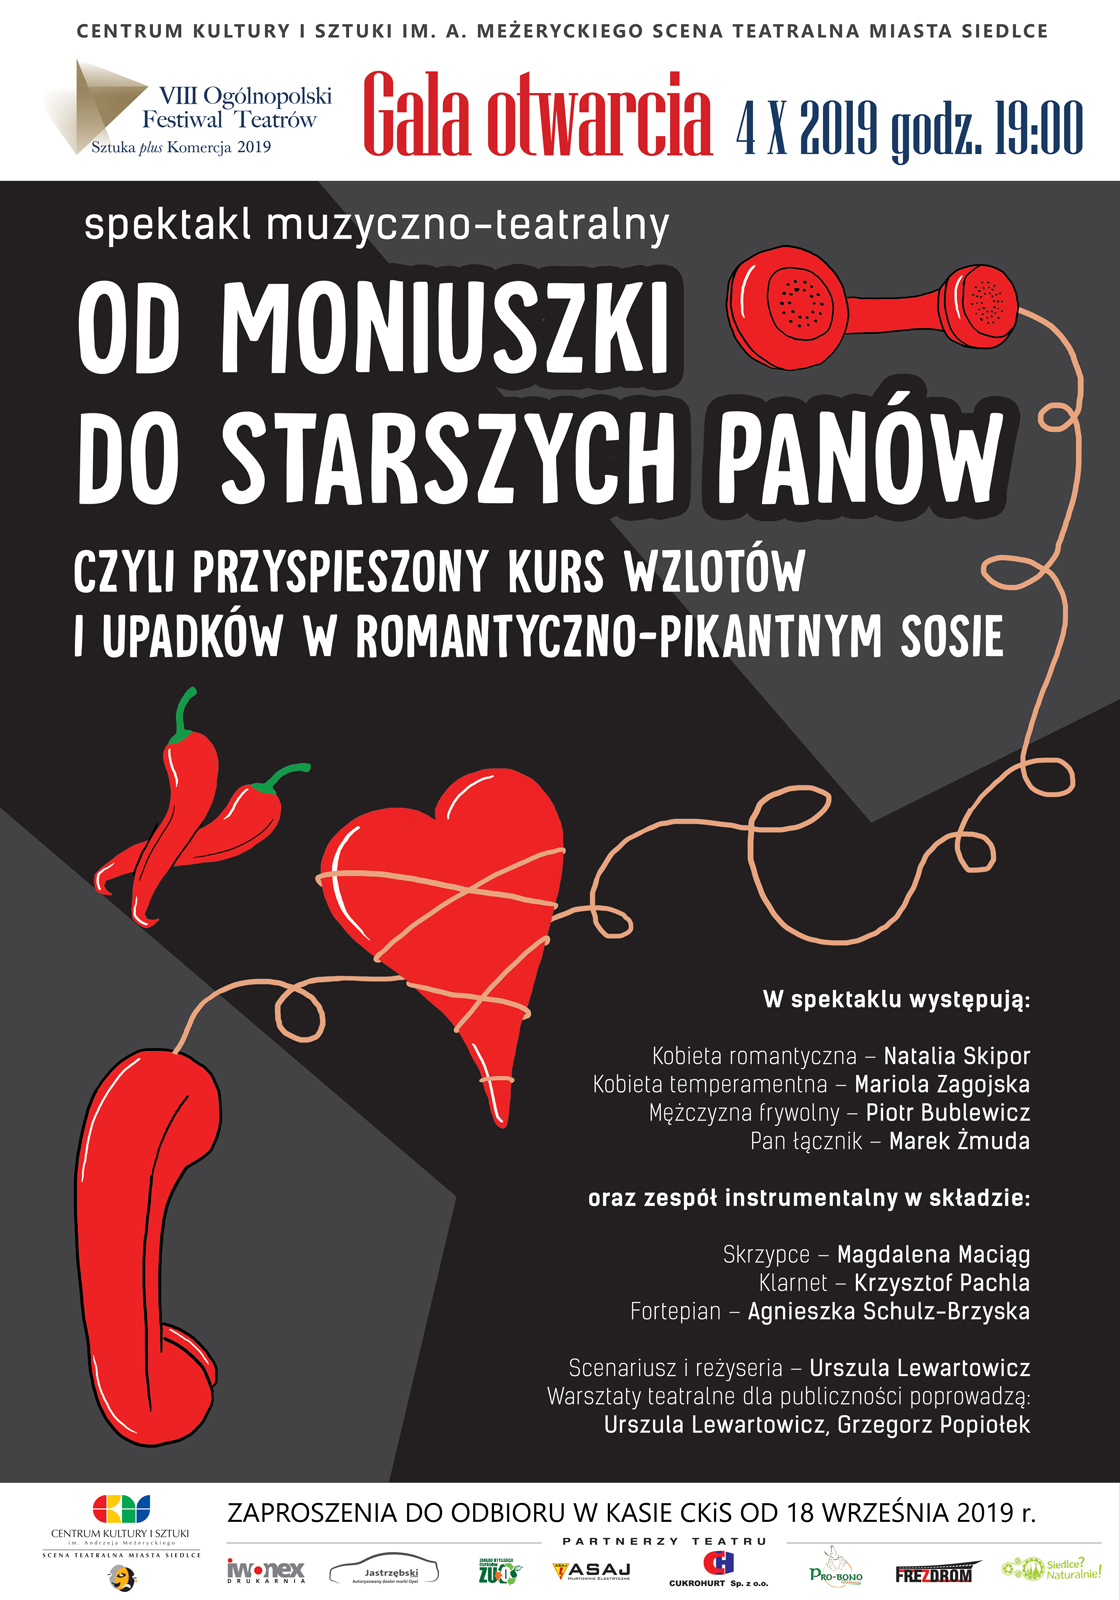 W październiku rusza VIII Ogólnopolski Festiwal Teatrów "Sztuka plus Komercja"